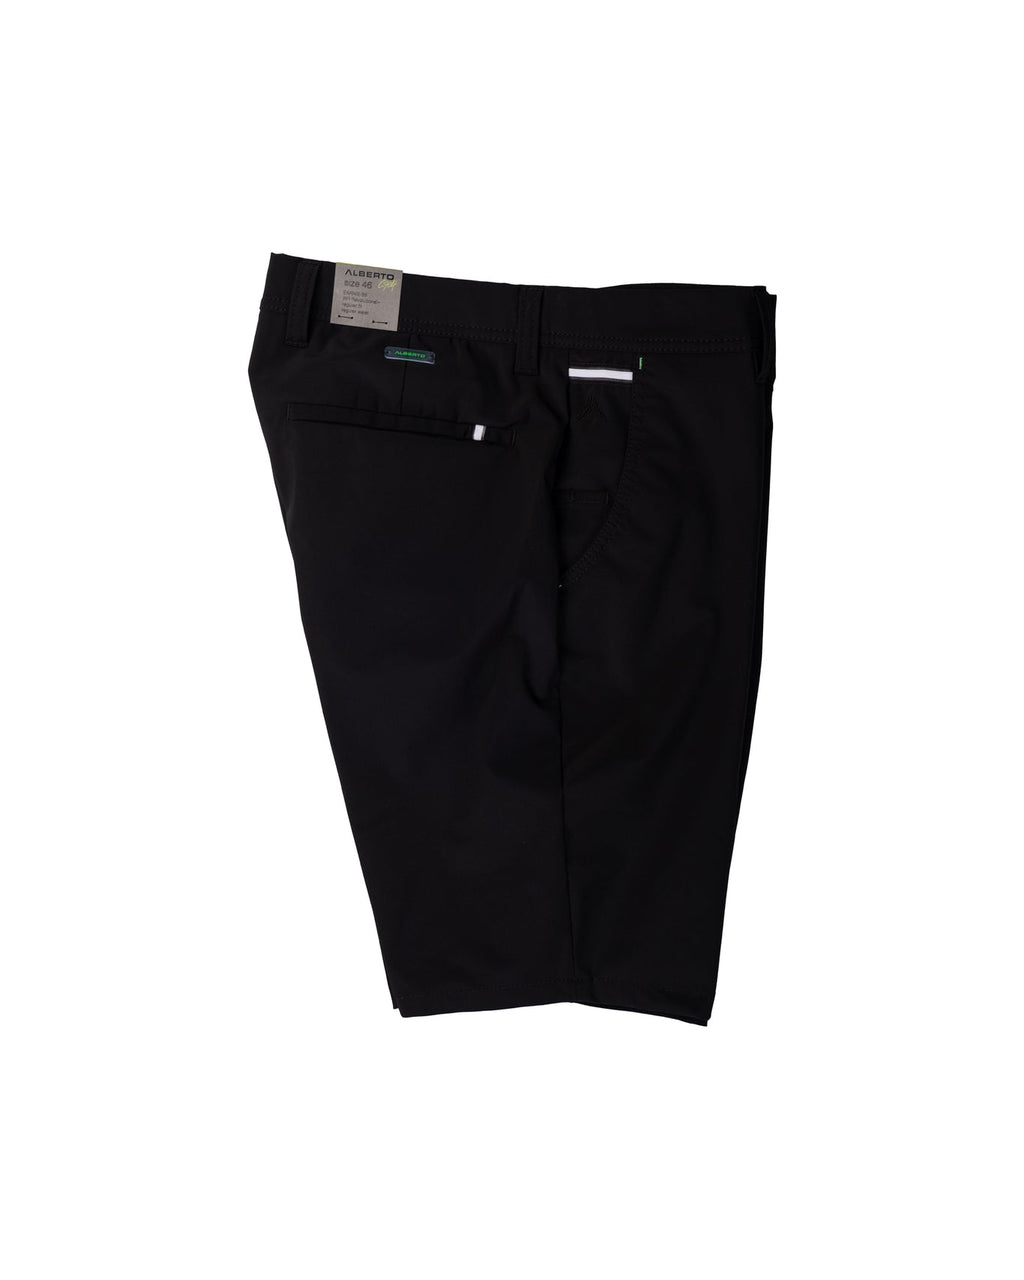 Alberto - Alberto Golf Revolutional Wr Technical Shorts - Black